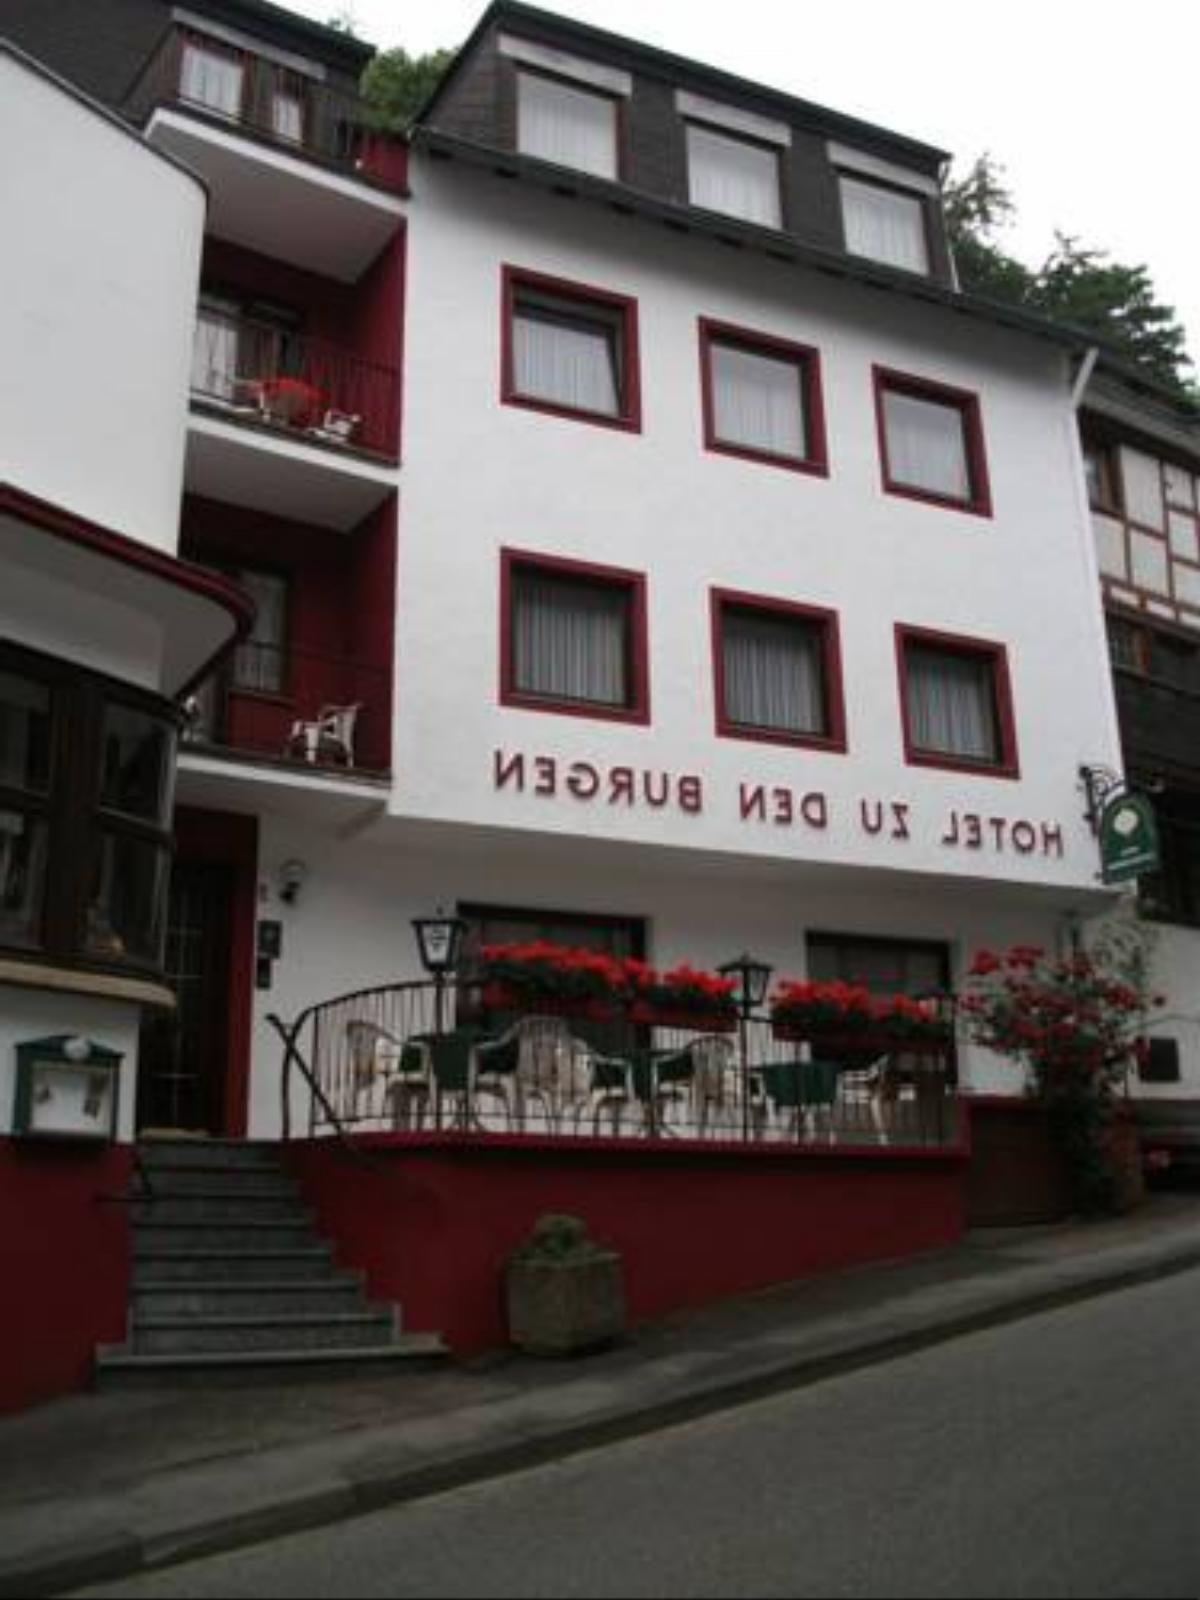 Hotel zu den Burgen Hotel Kamp-Bornhofen Germany